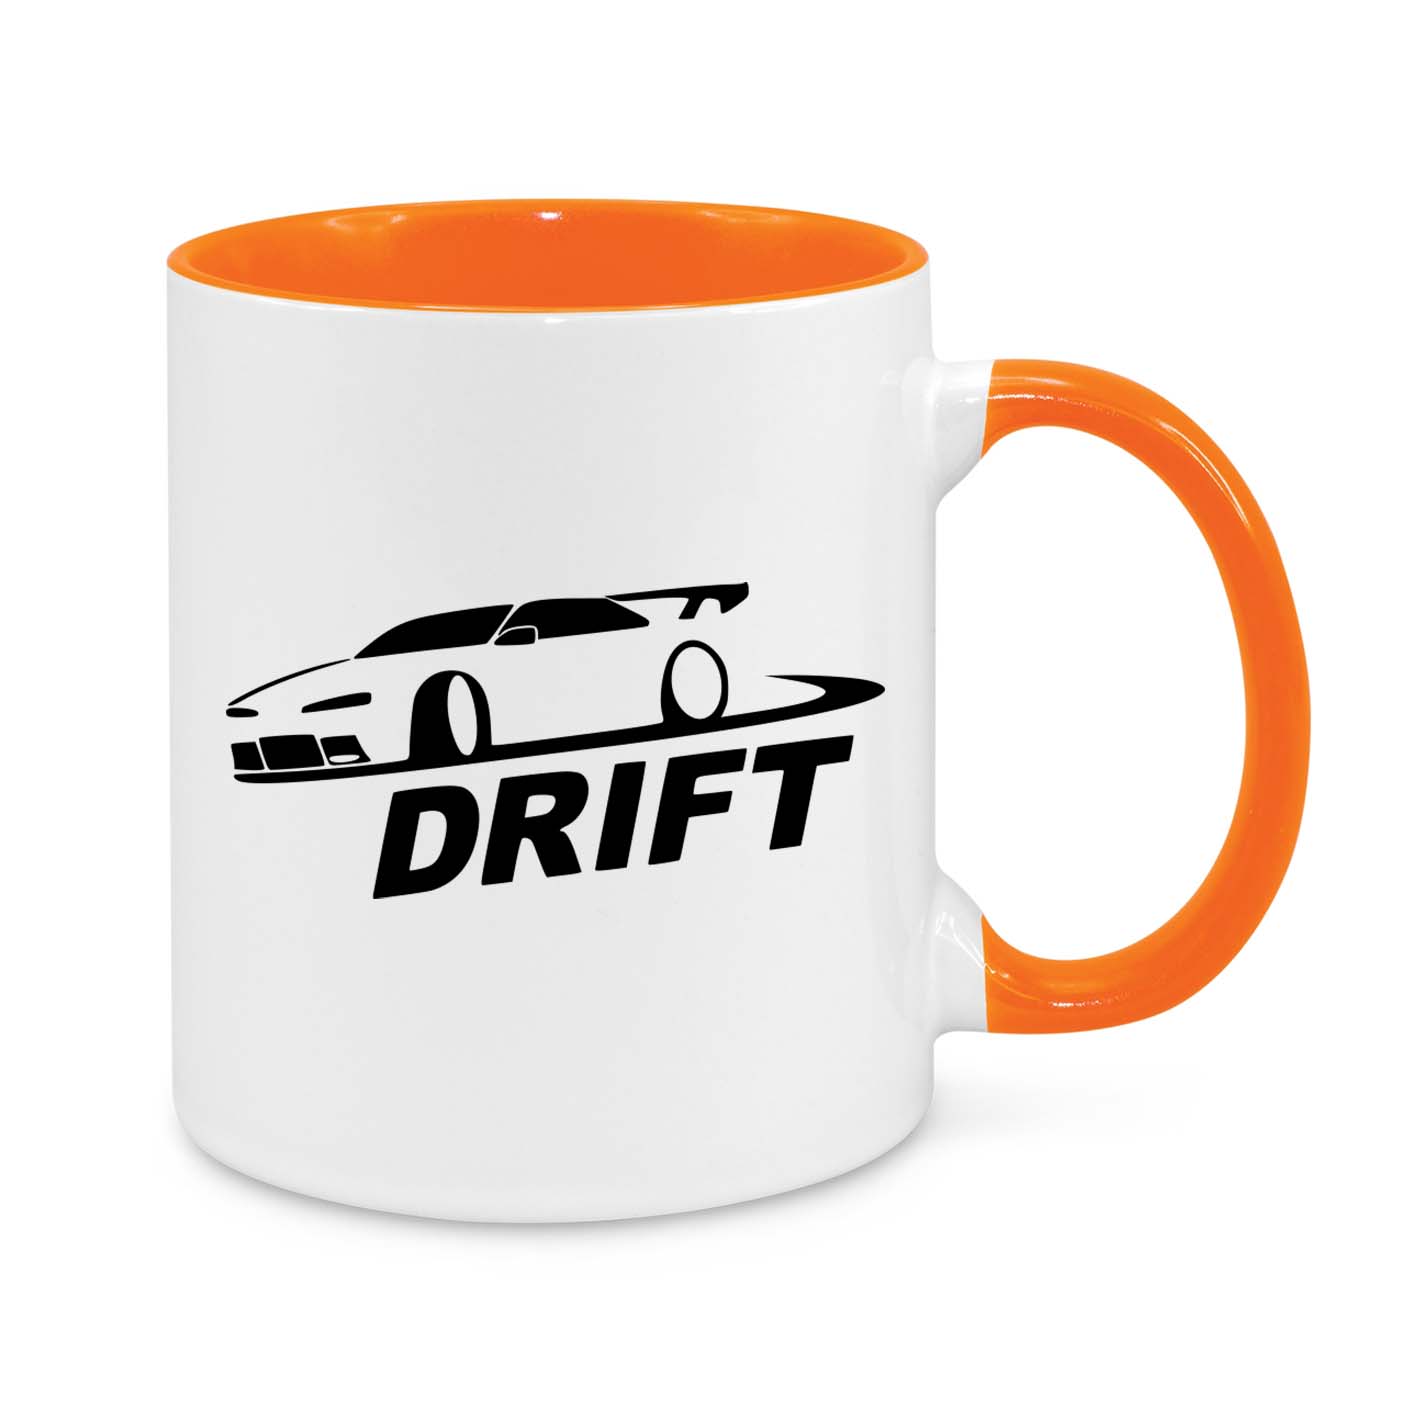 Drift Novelty Mug